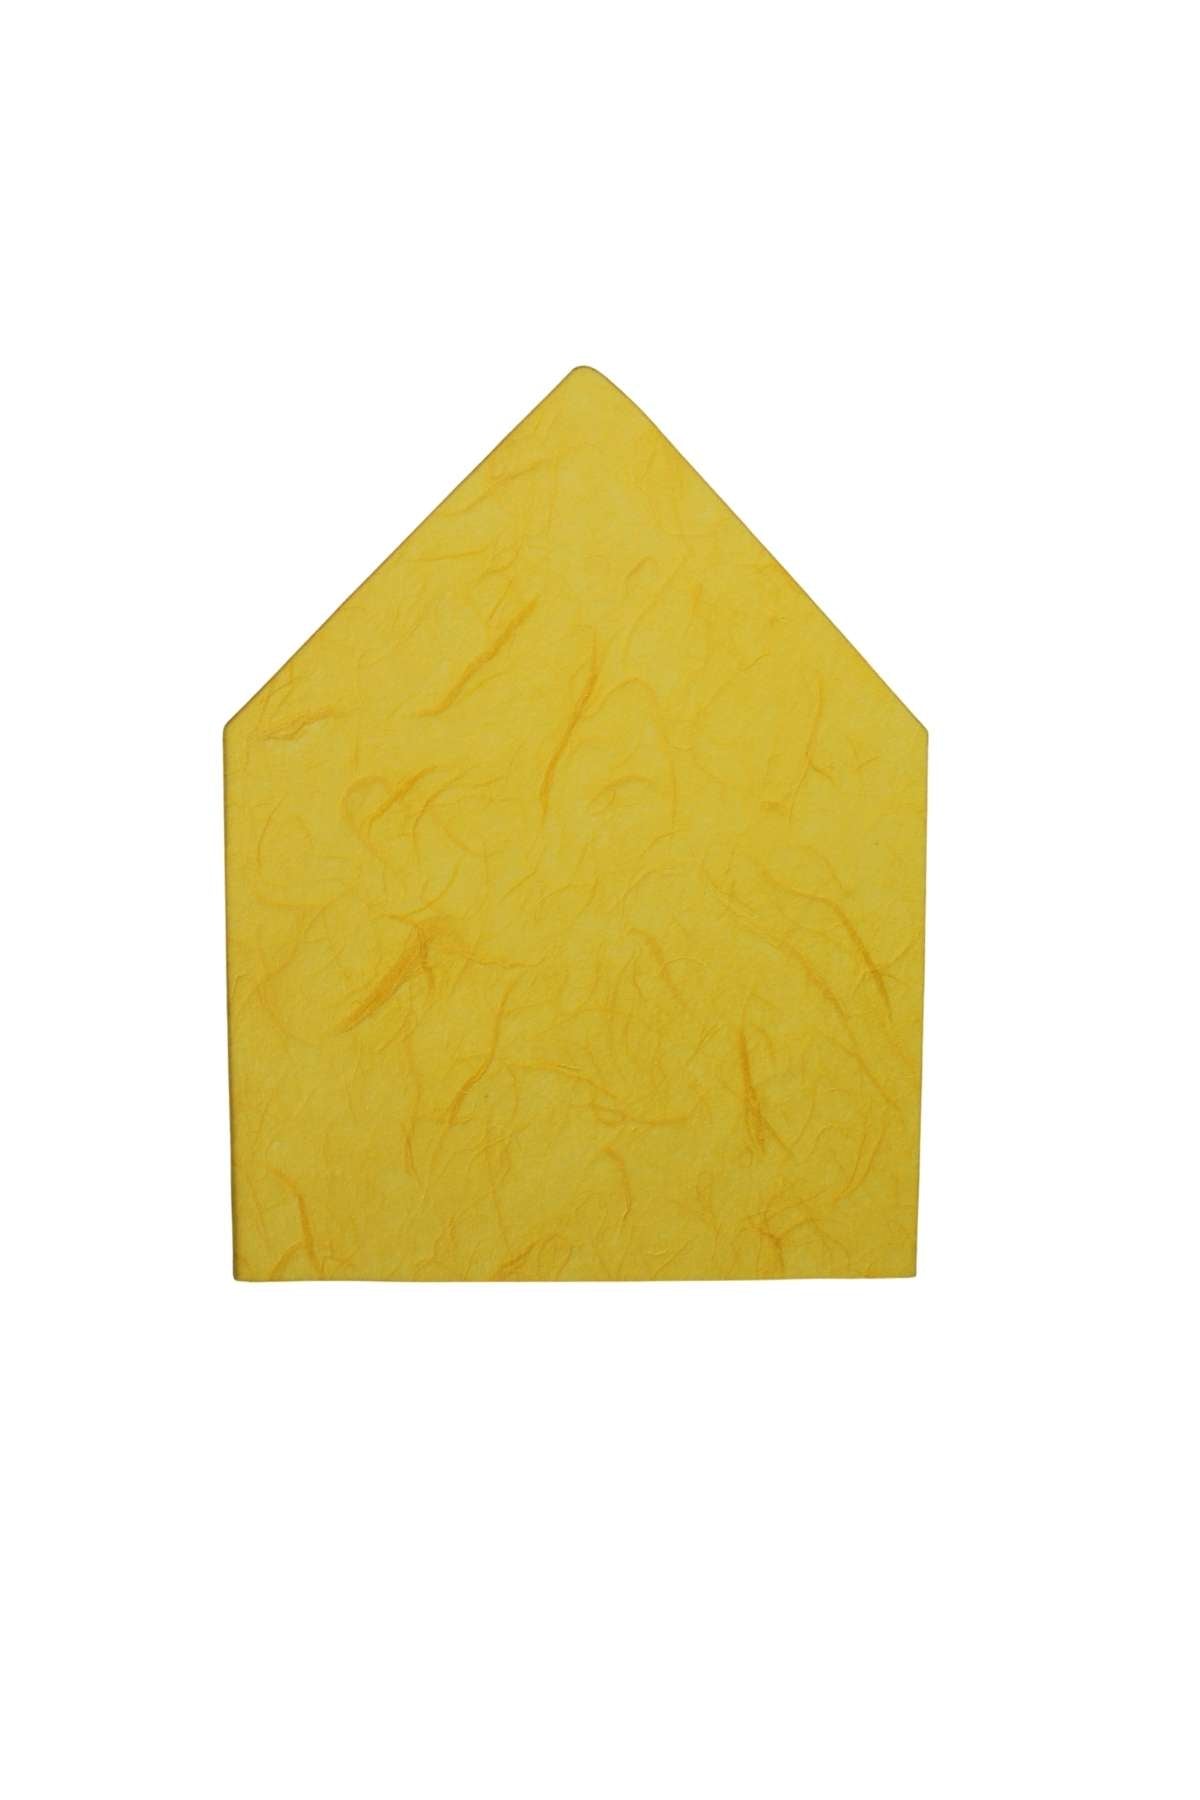 Envelope Liner Yellow - Liberties Papers